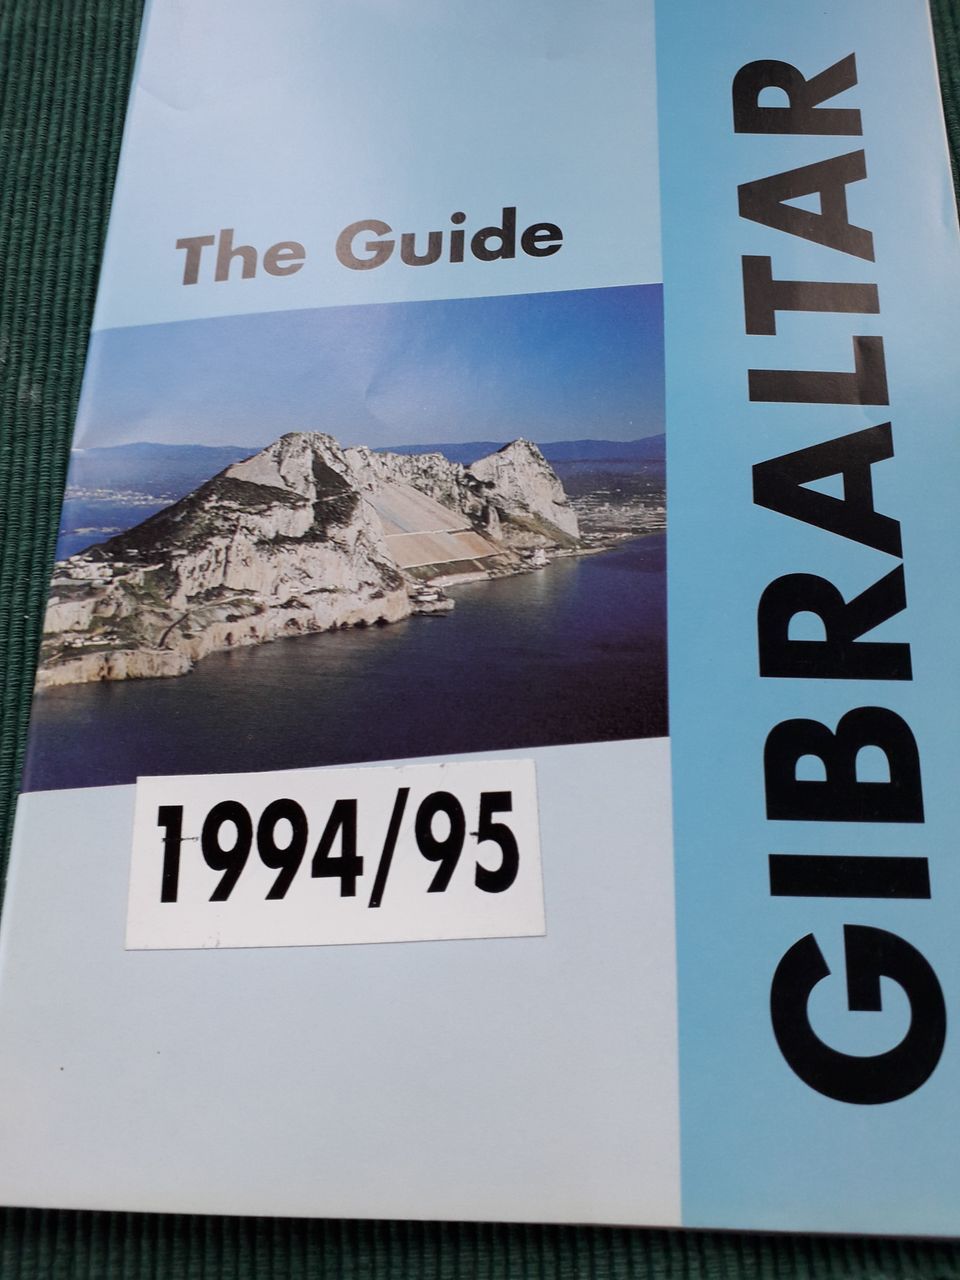 The Gibraltar esite